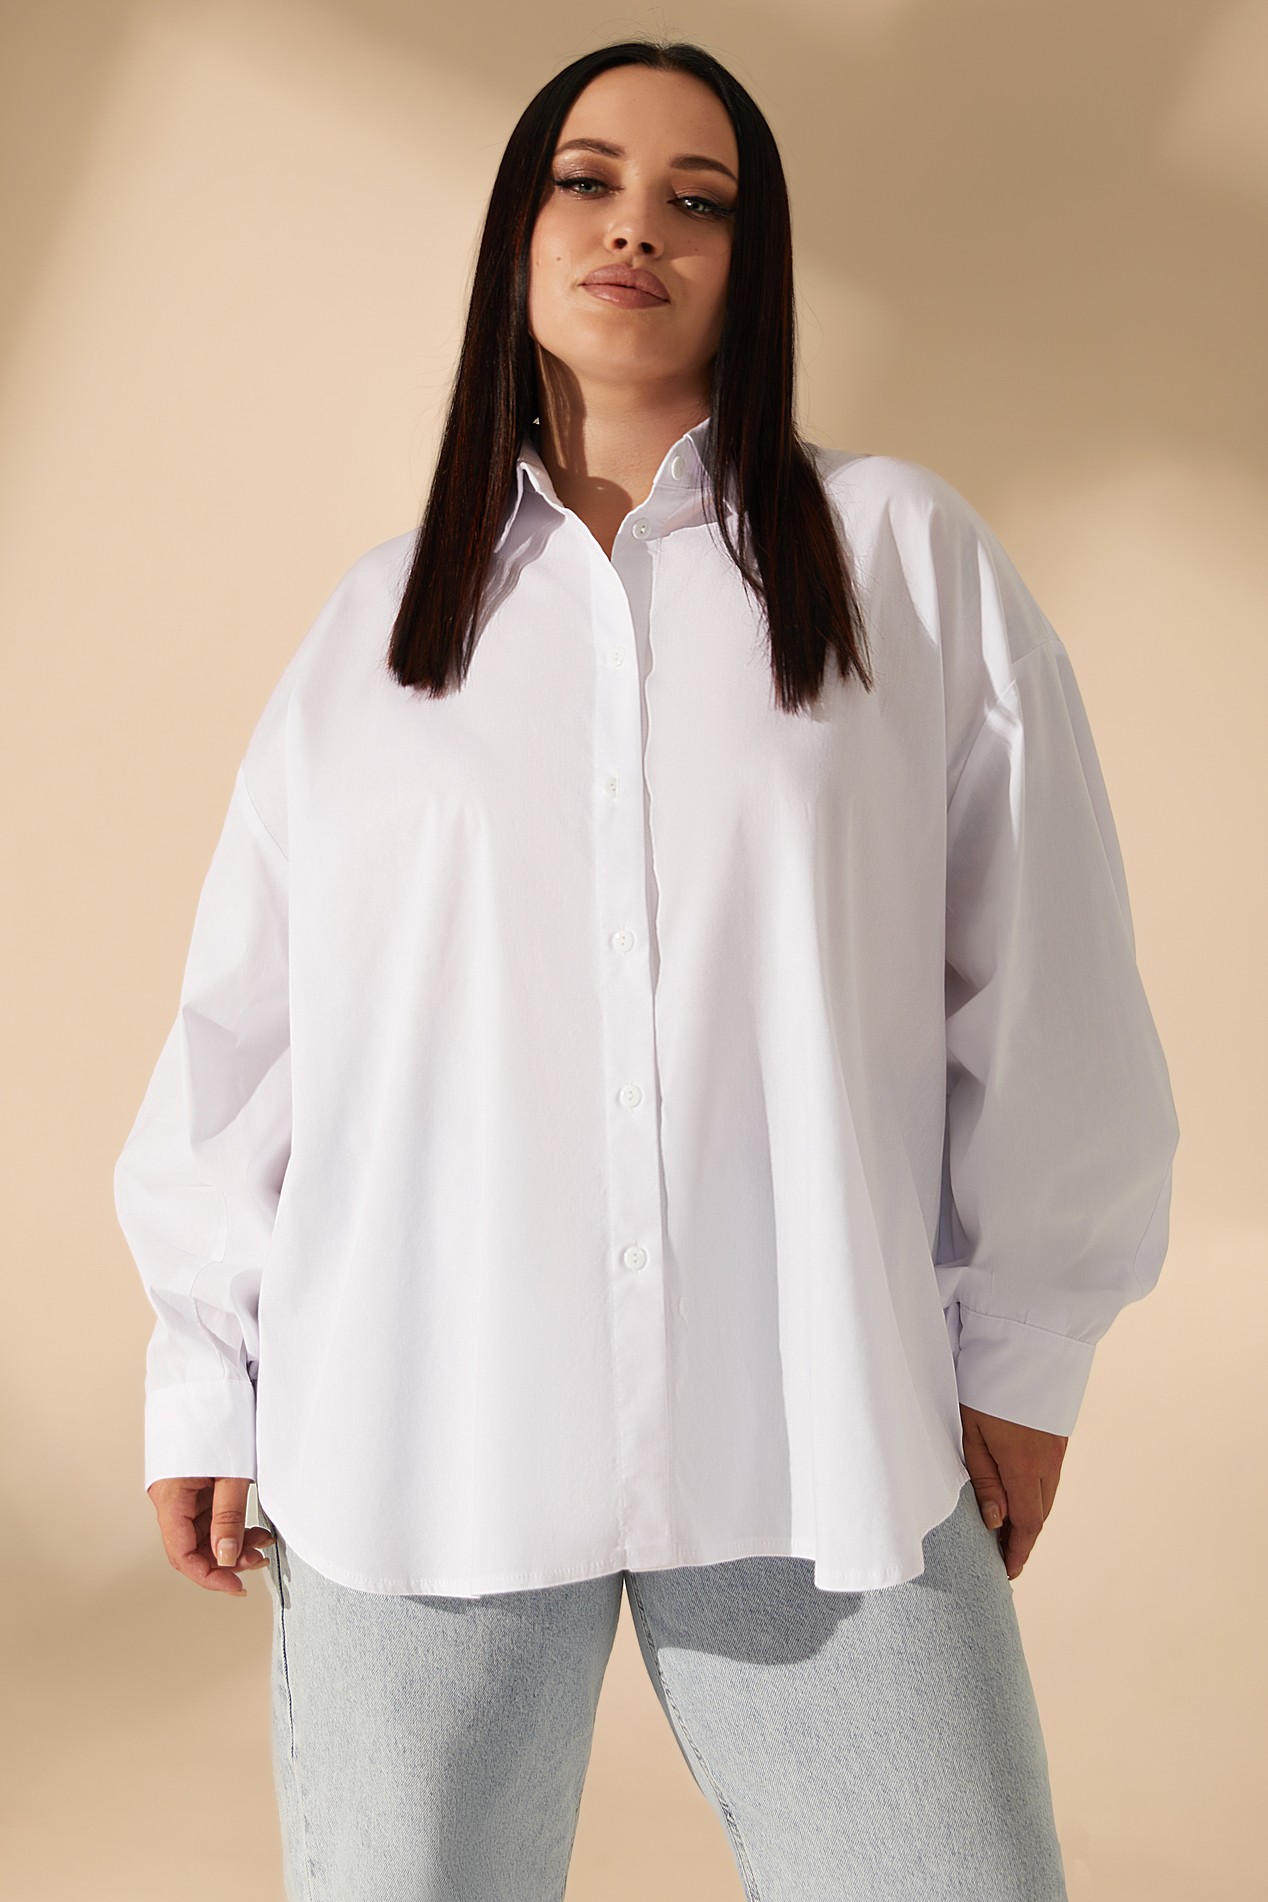 Buy Women's plus size shirt - VOVK women's clothing online store